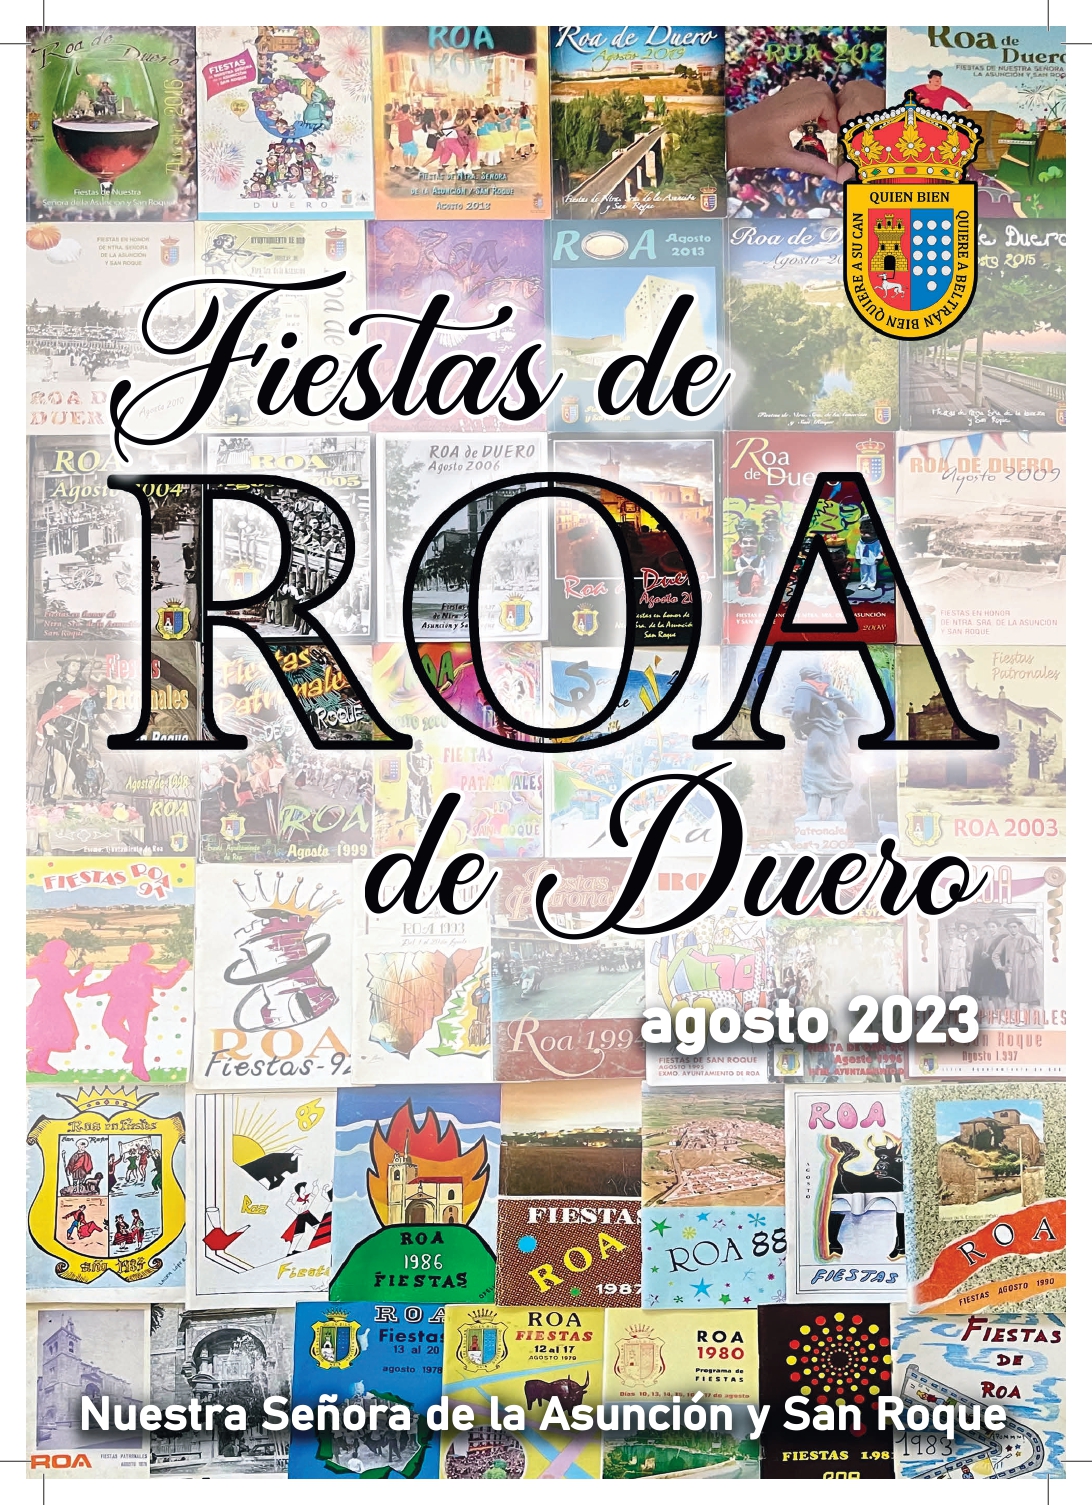 FIESTAS DE ROA 2023